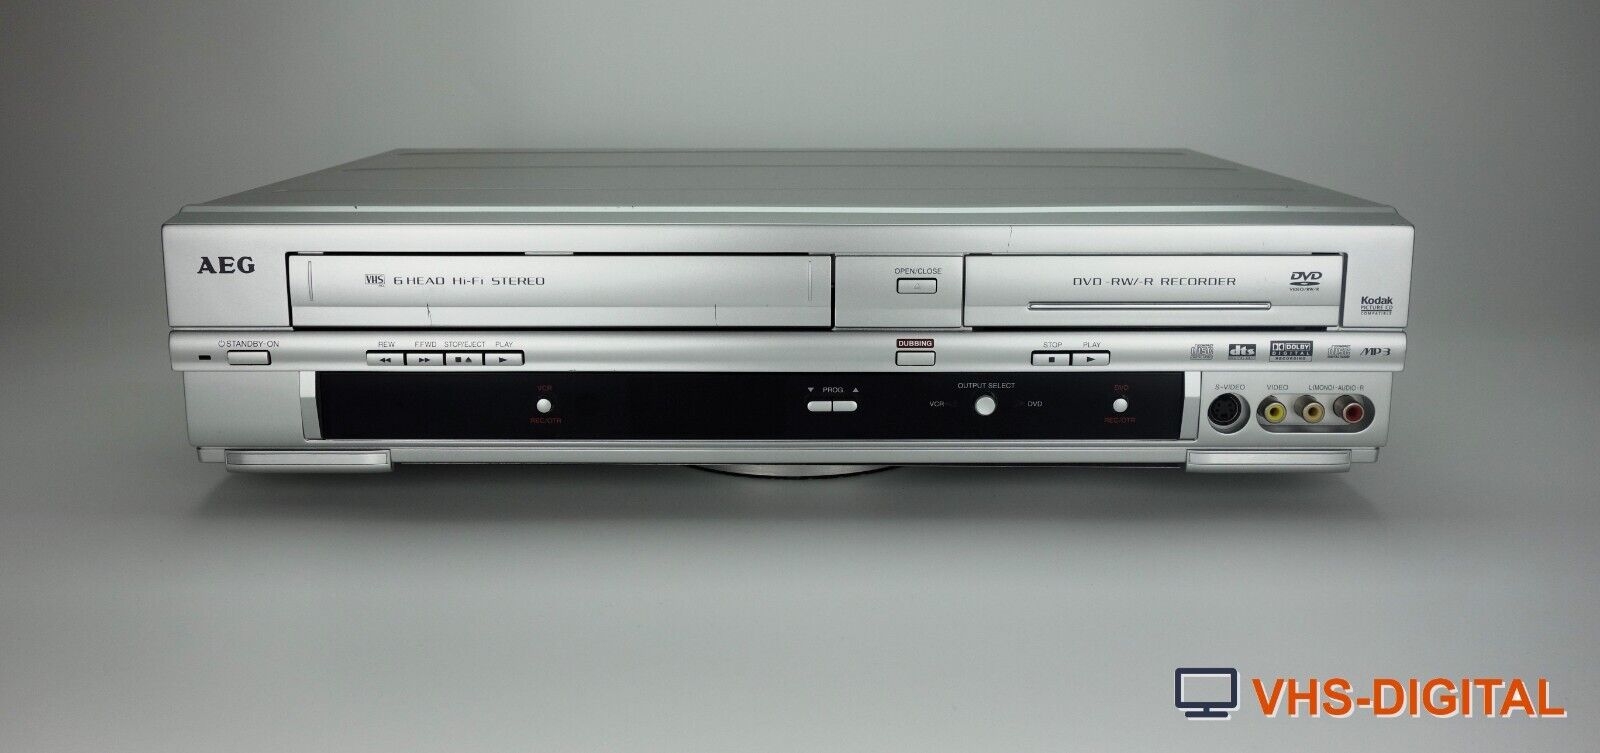 AEG DVD-R 4509 - DVD VHS Video Recorder VCR Kombigerät zum Digitalisieren